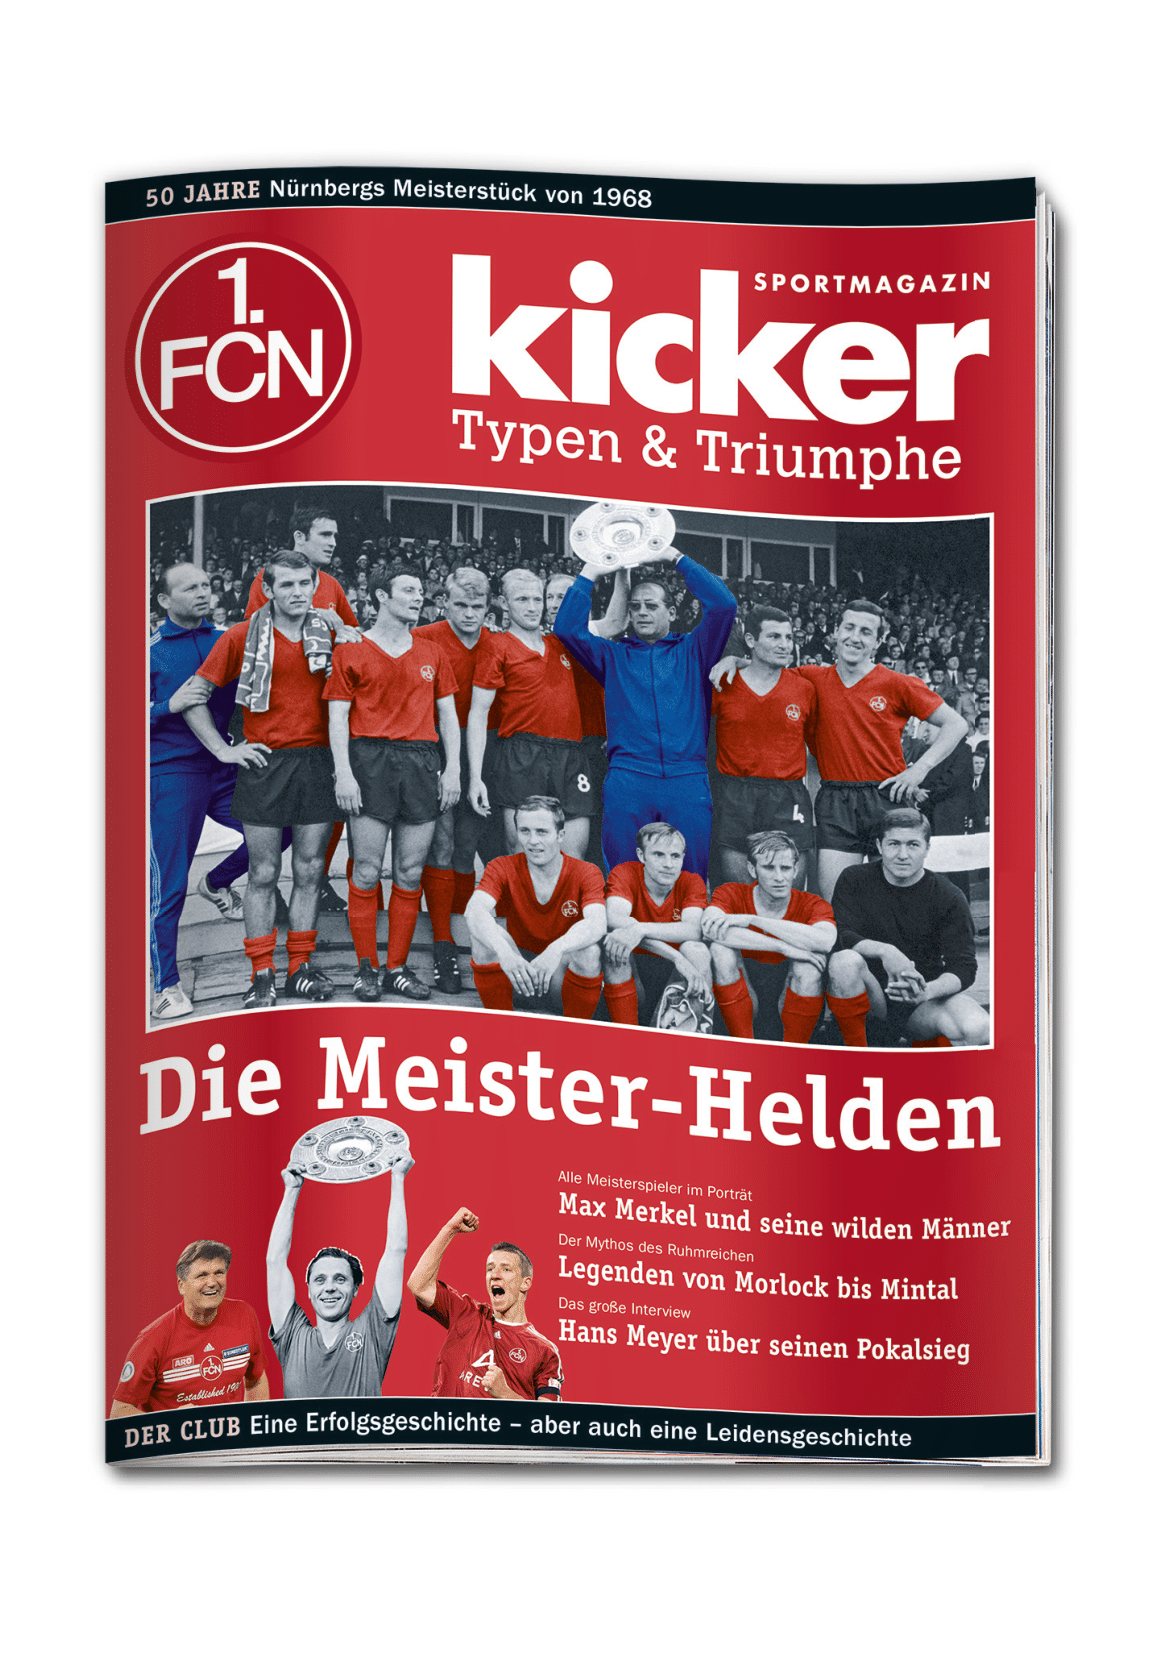 kicker Typen & Triumphe 1. FC Nürnberg "Die Meister-Helden"